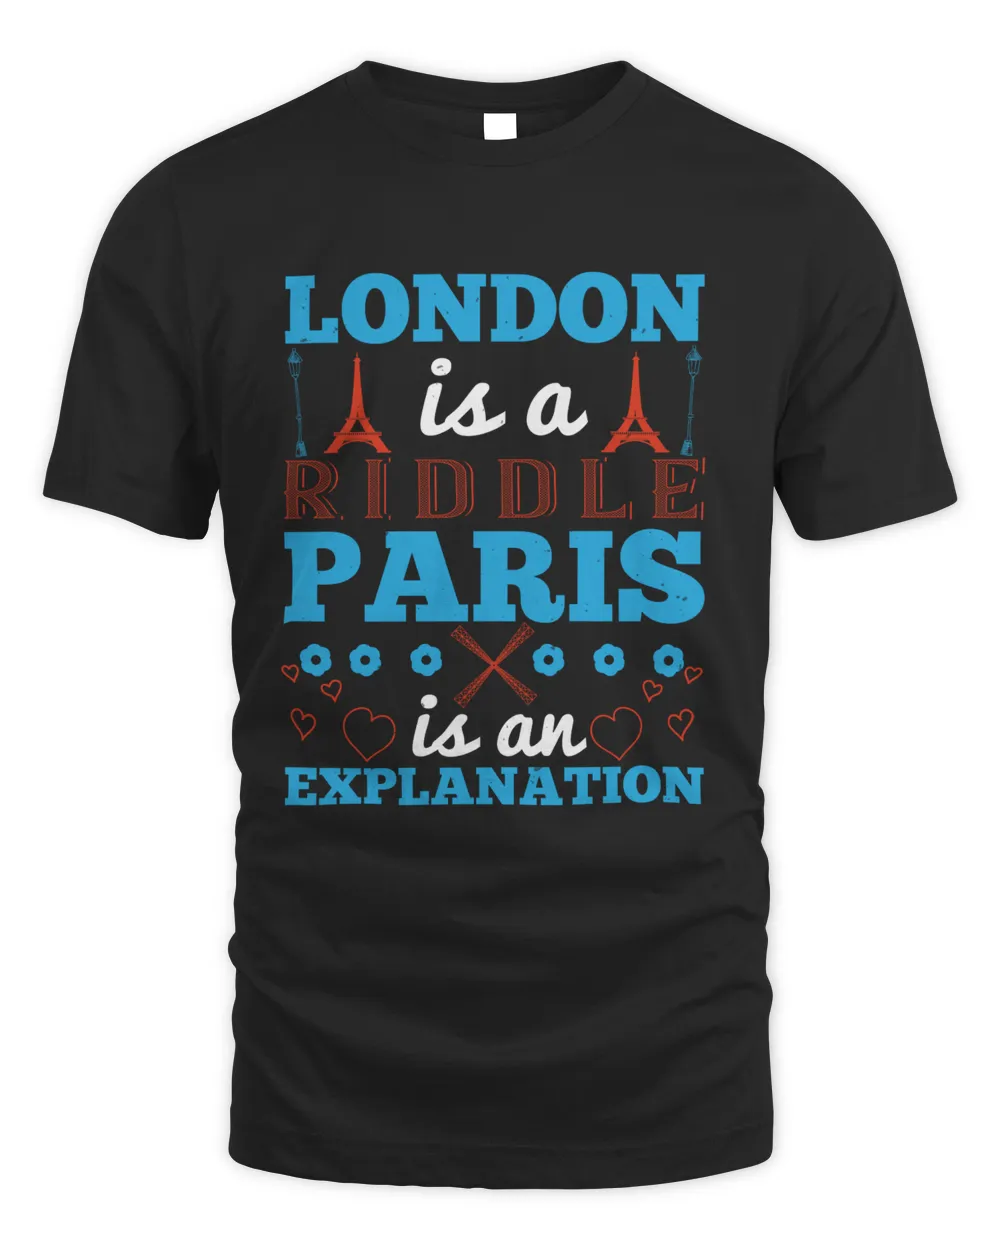 London is a riddle. Paris is an explanation-01